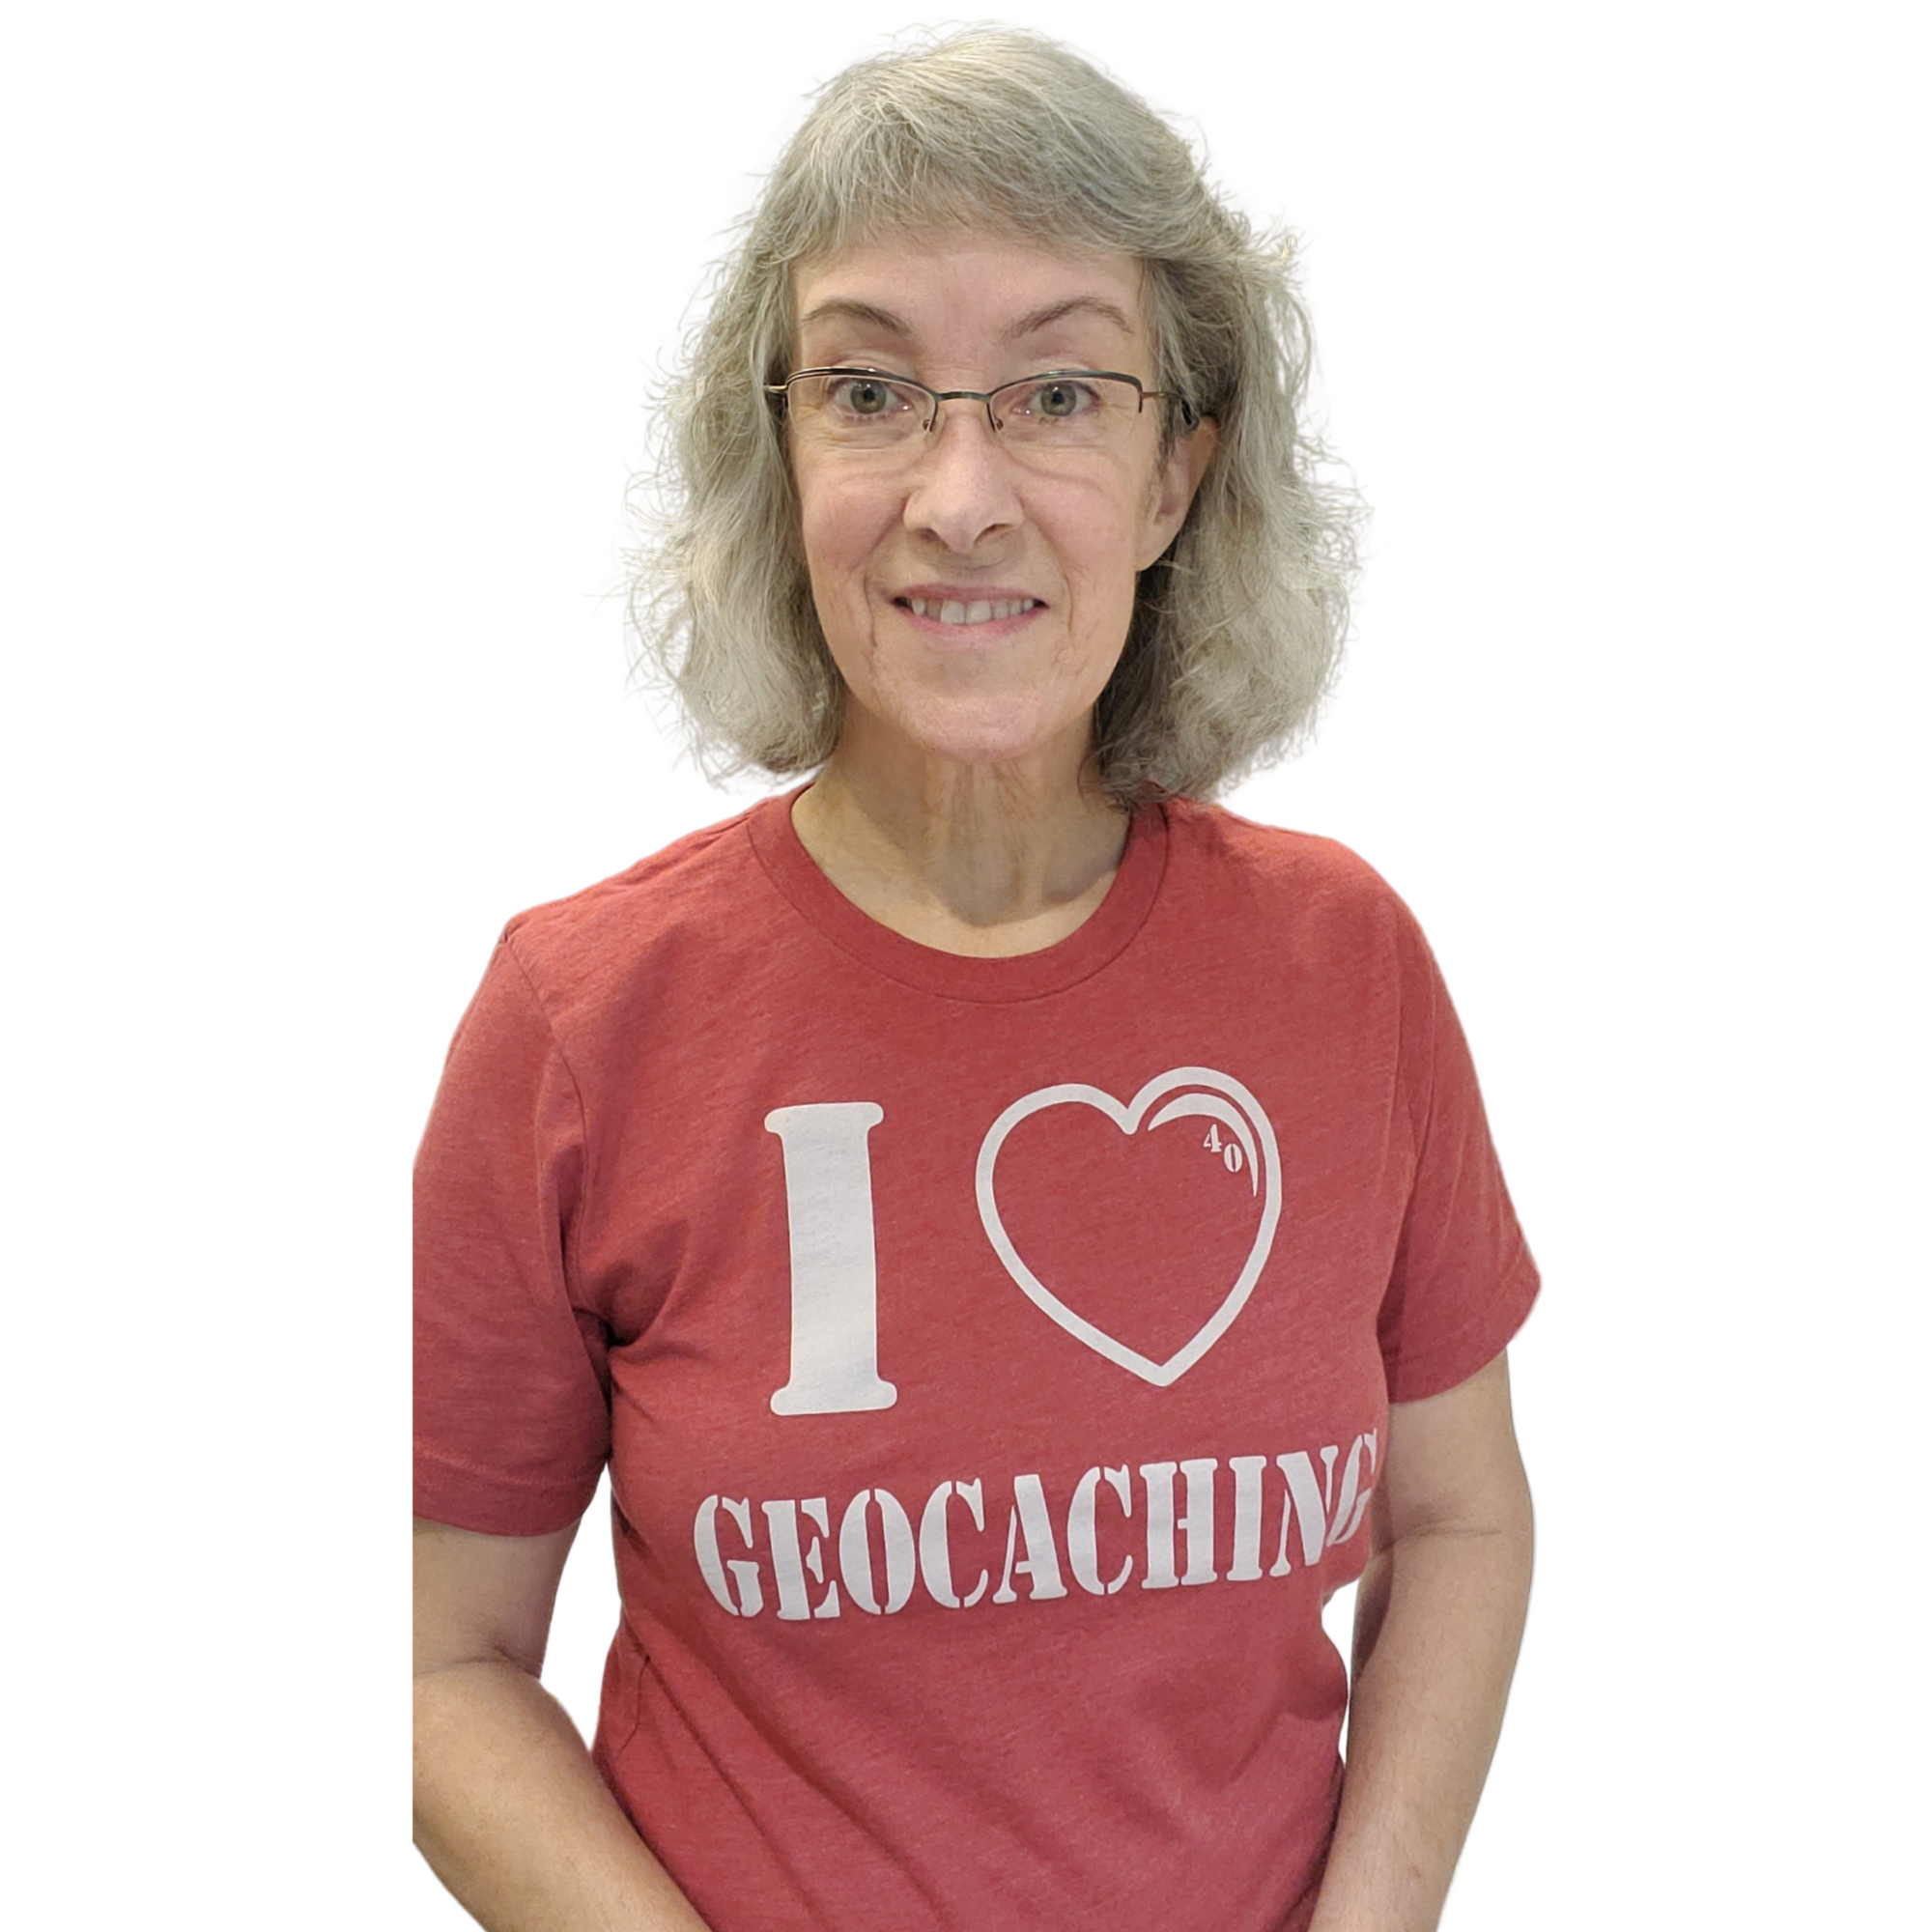 I Love Geocaching T-Shirt